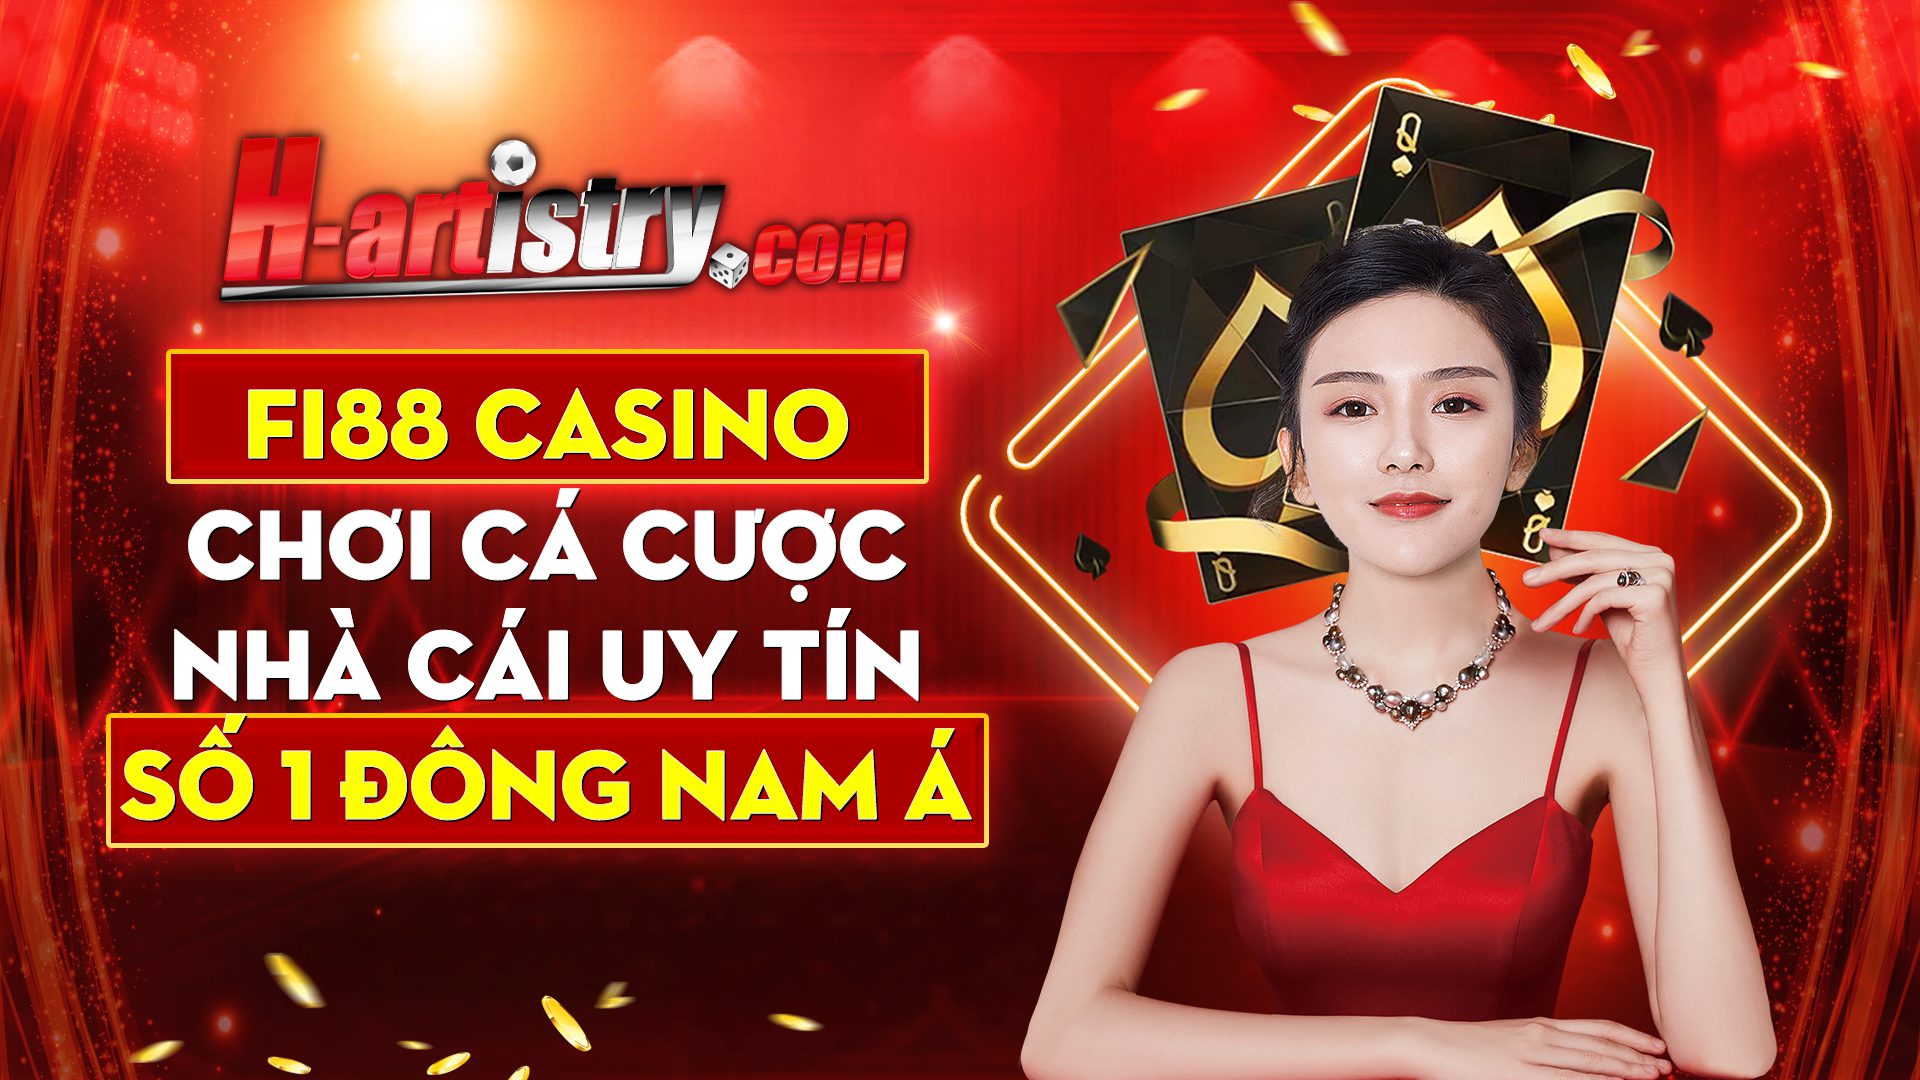 Fi88 Casino Choi Ca Cuoc Nha Cai Uy Tin So 1 Dong Nam A 1655446570